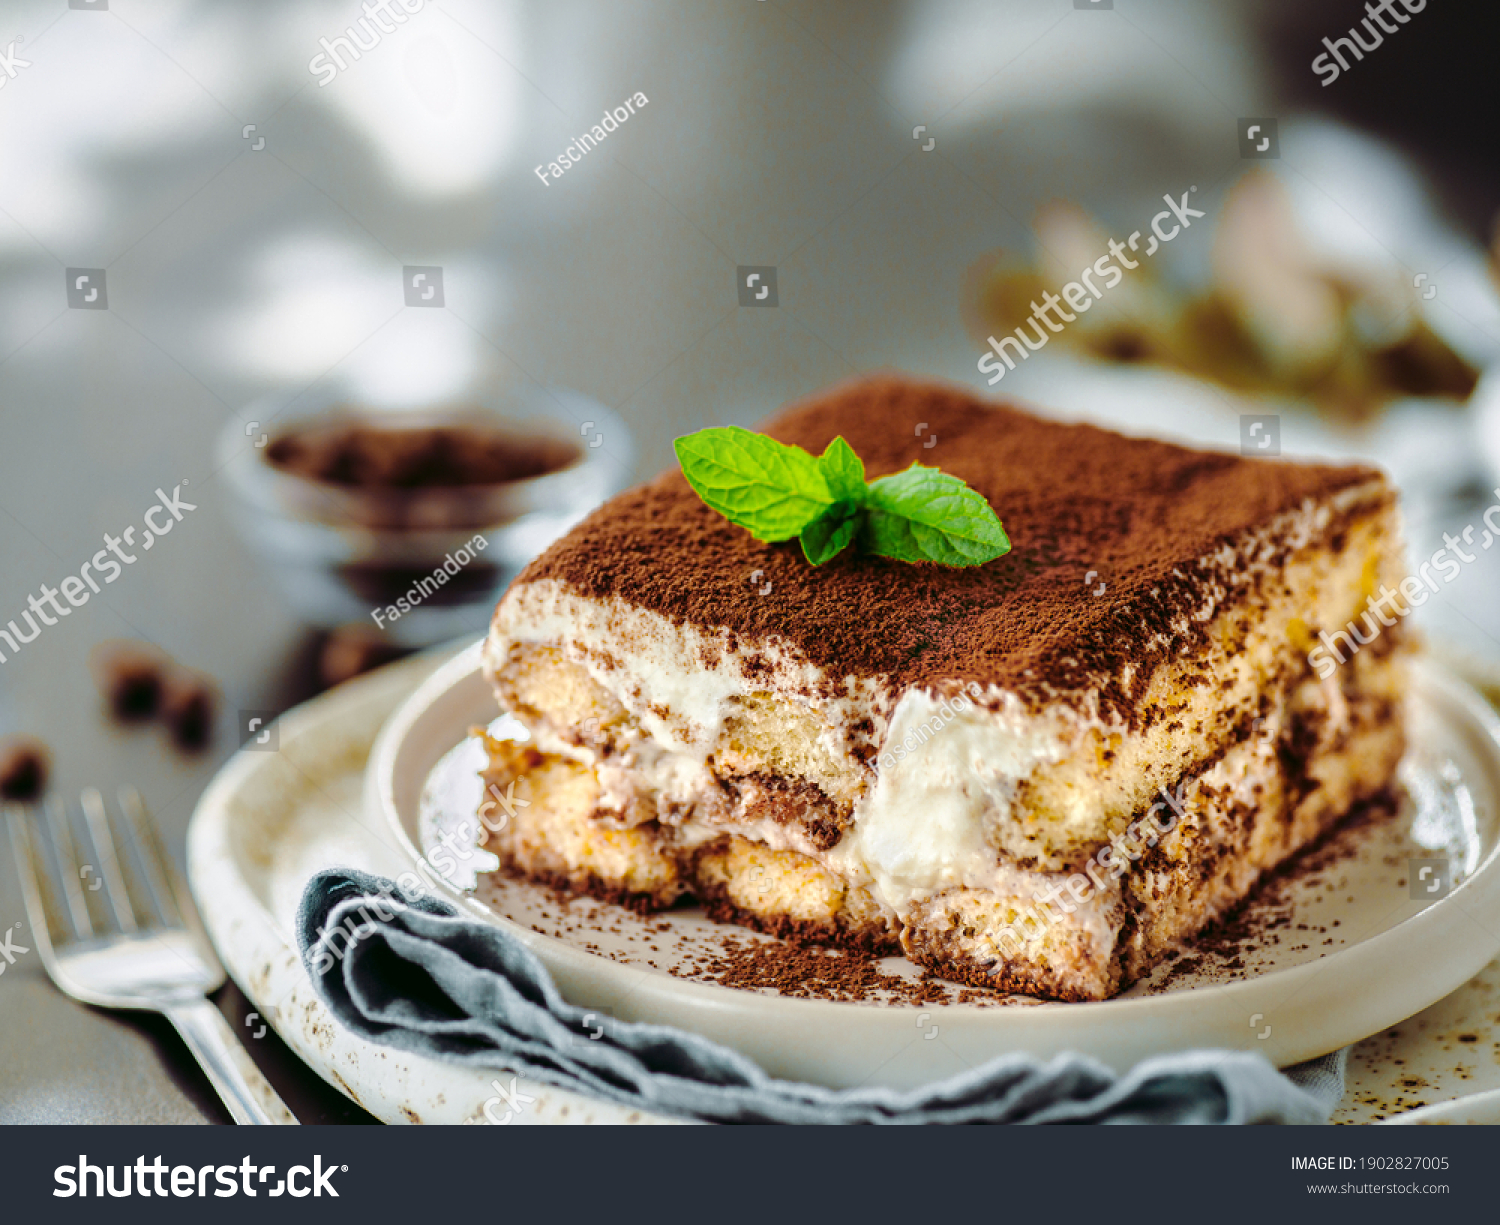 Perfect homemade tiramisu cake with fresh mint. Tiramisu portion on plate over gray background. Delicious no bake tiramisu ready-to-eat. Close up. Copy space #1902827005